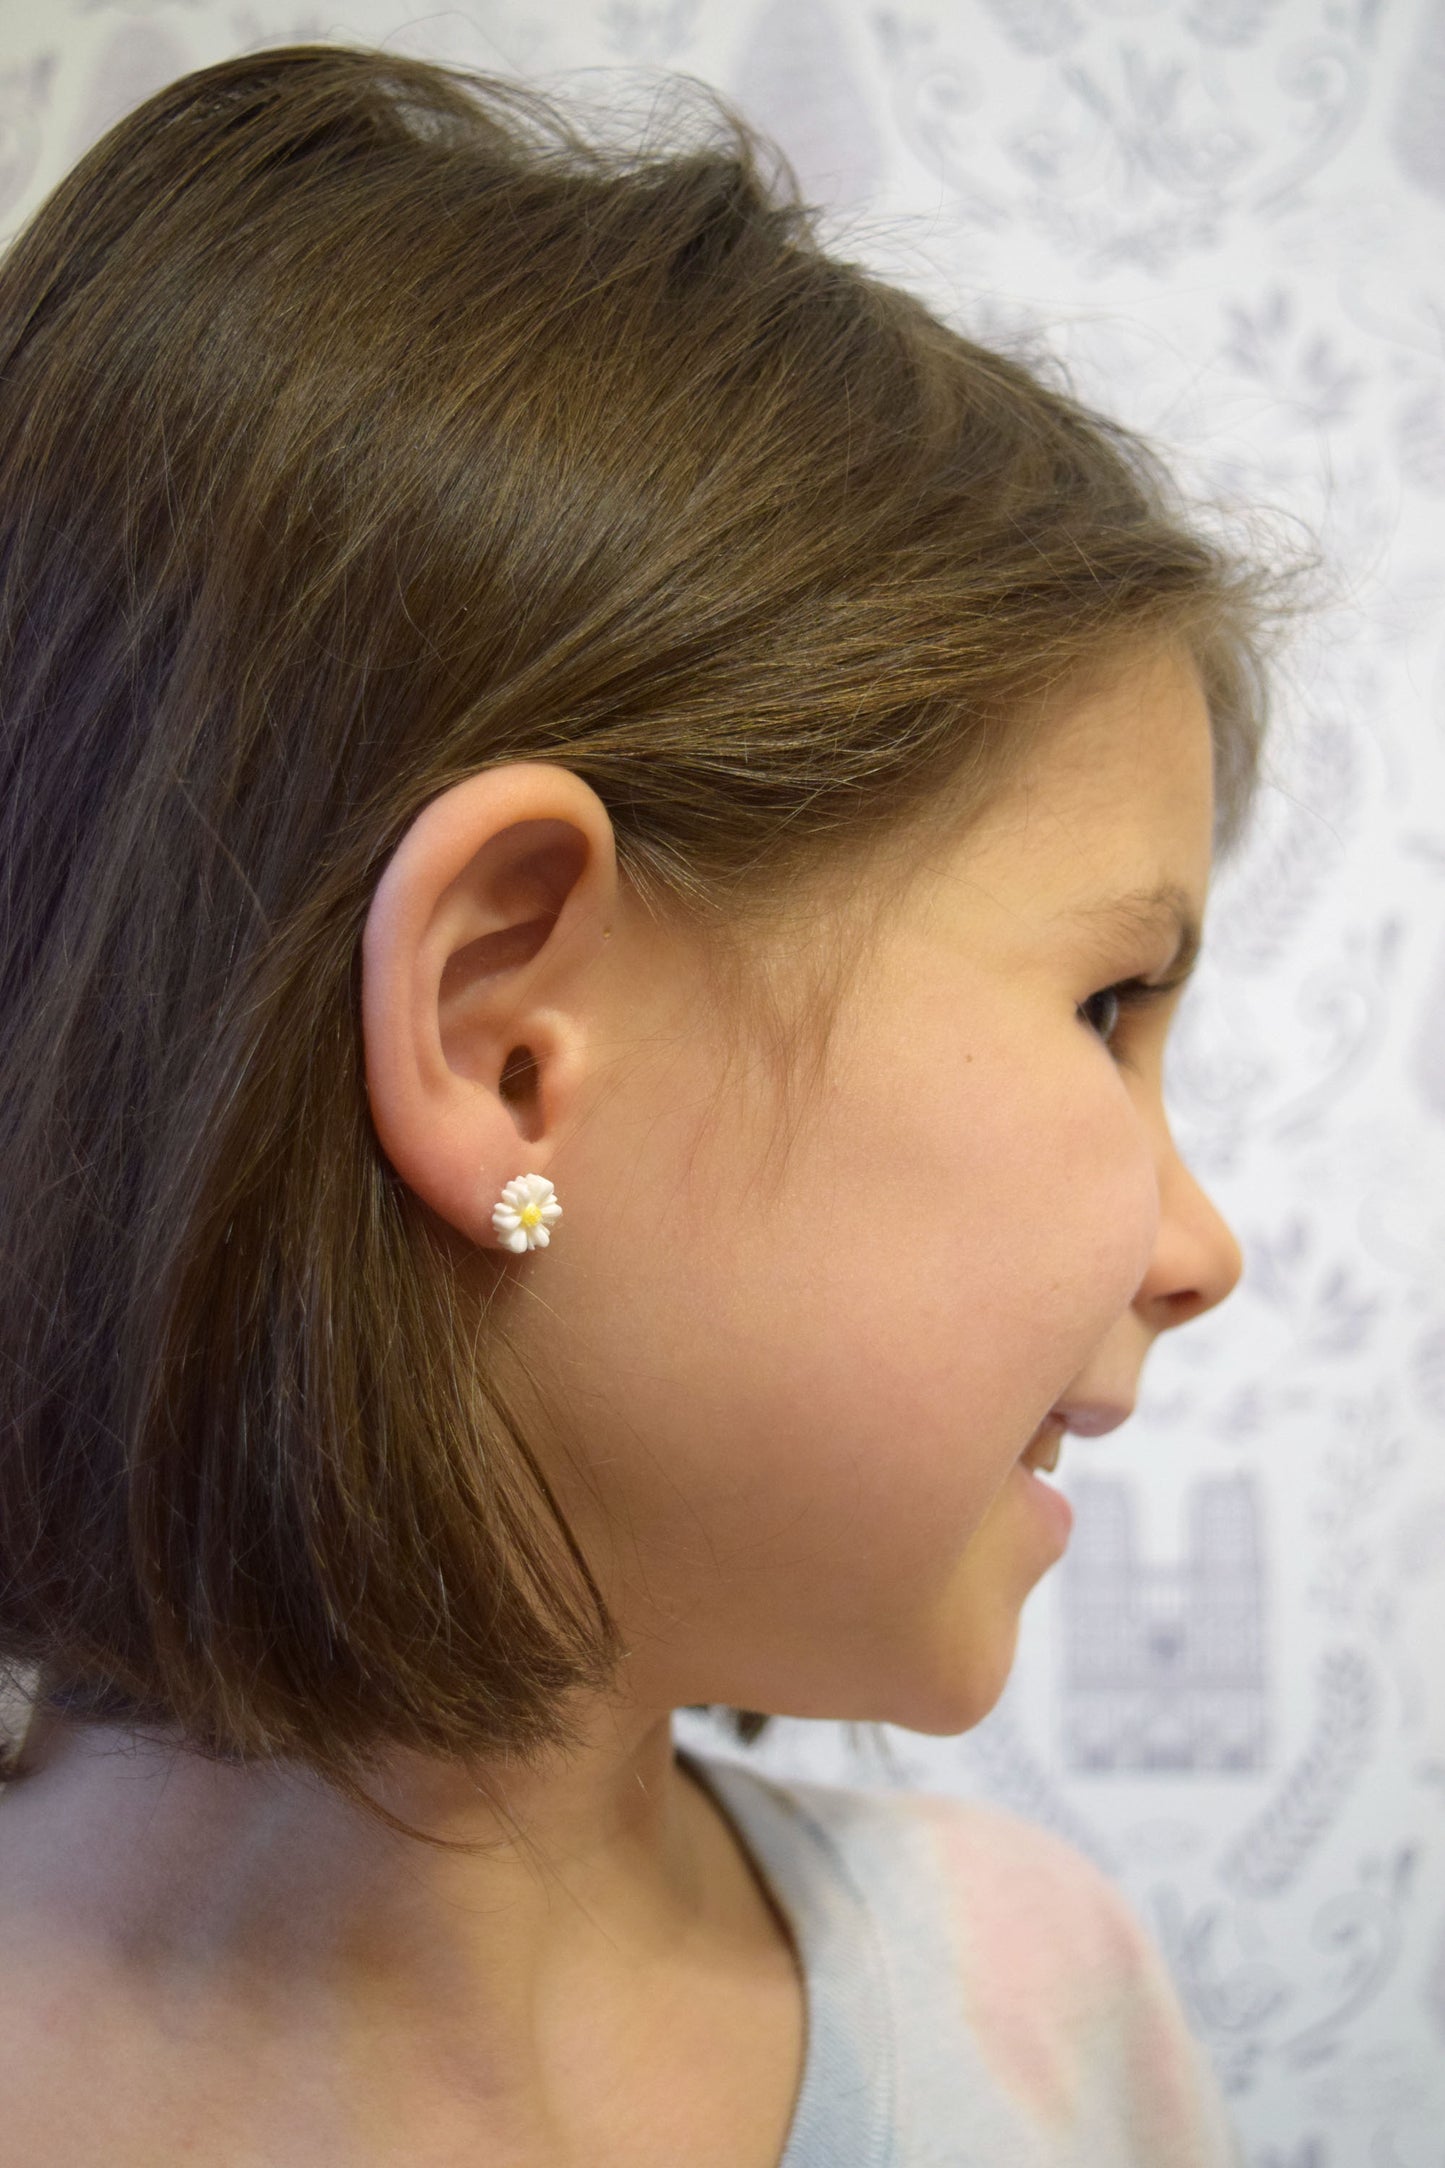 daisy earrings, mary earrings, catholic girl earrings, catholic kid earrings, mother of god earrings, catholic girl gift